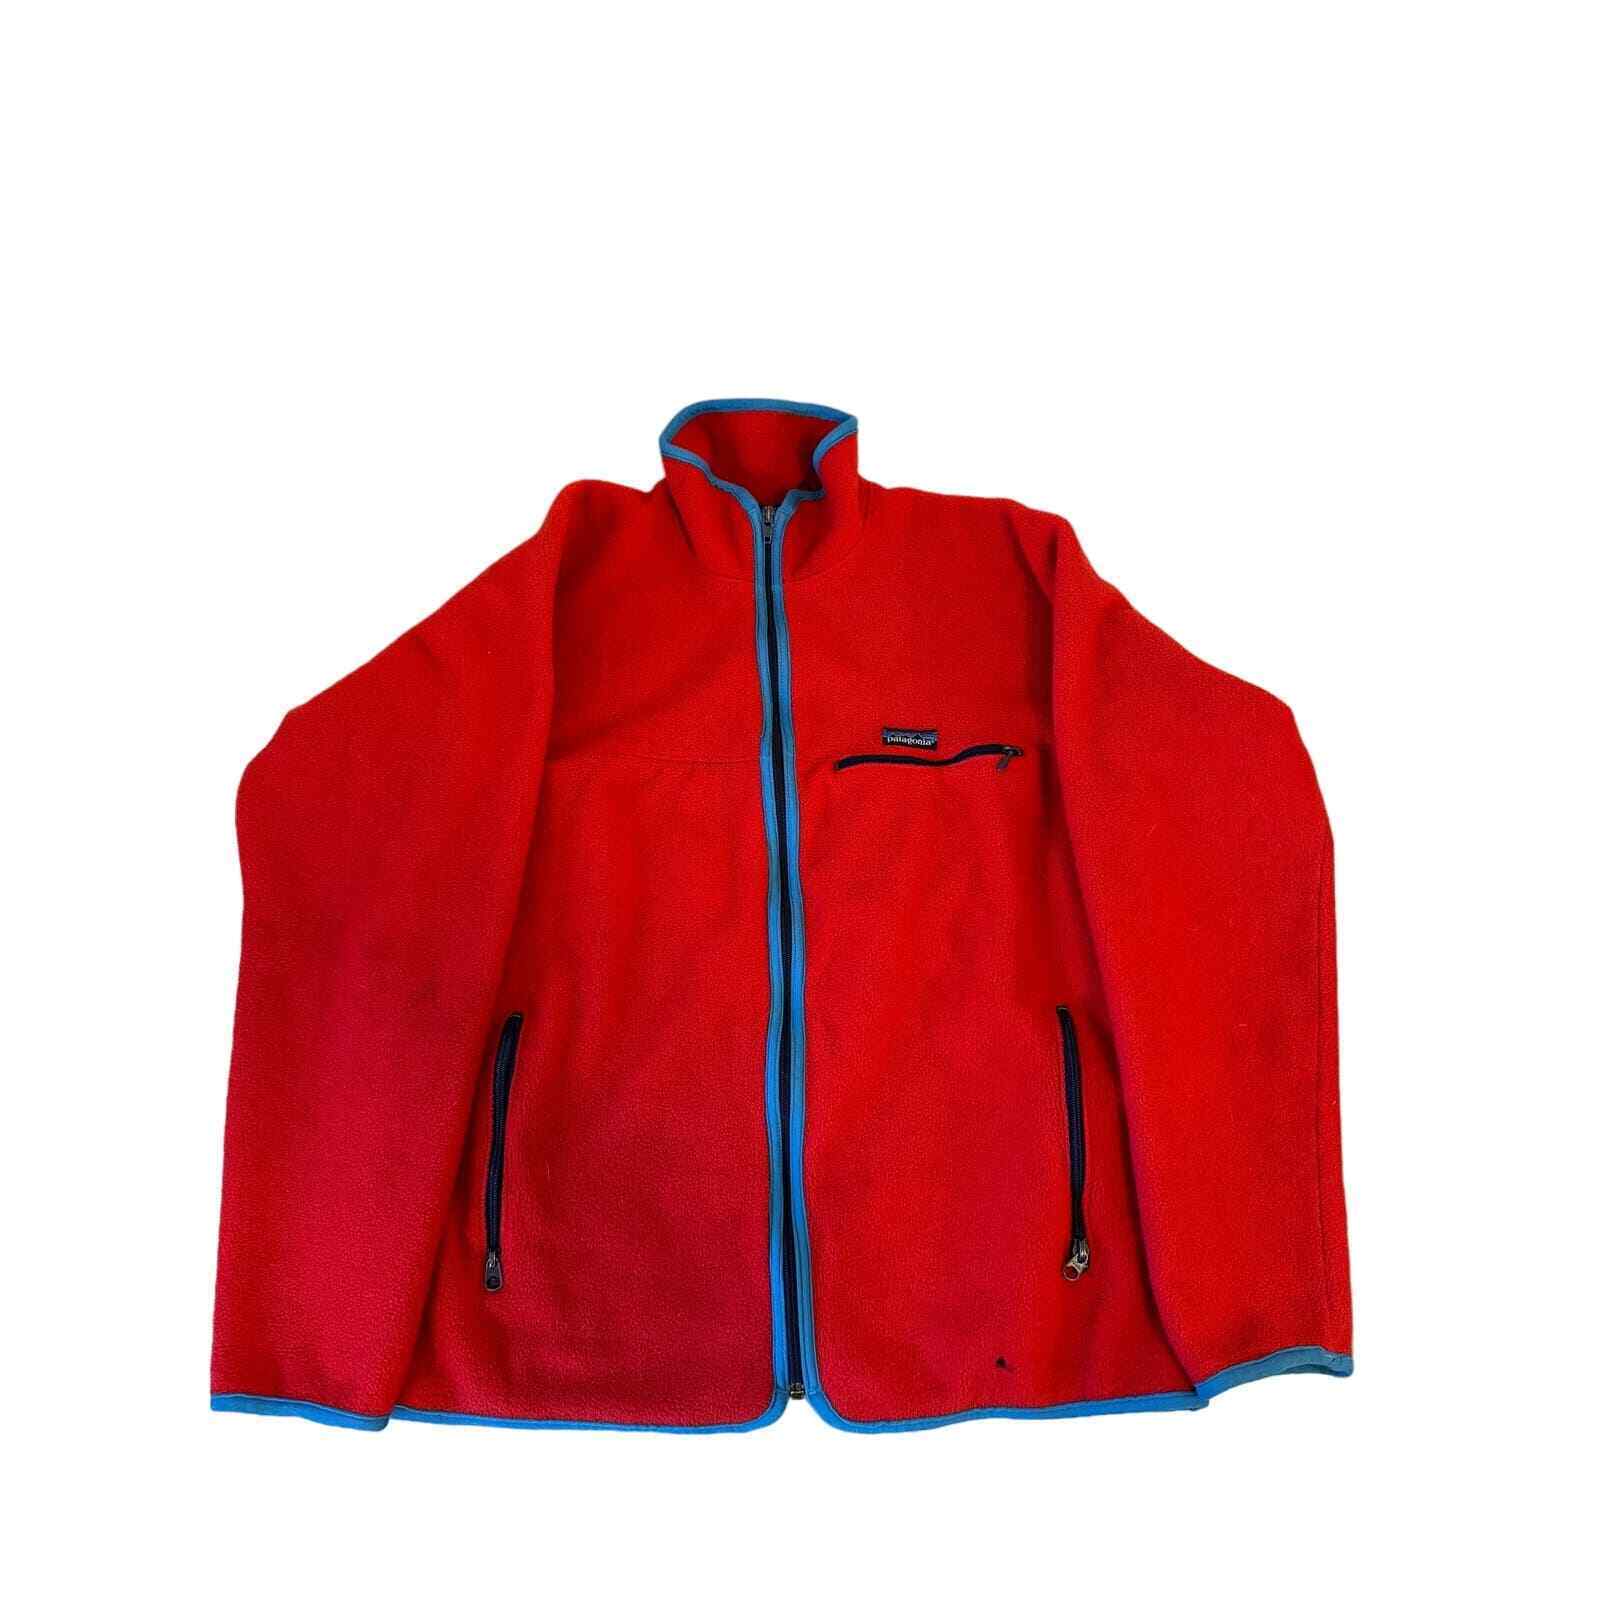 Vintage Patagonia Red Fleece Jacket - size L